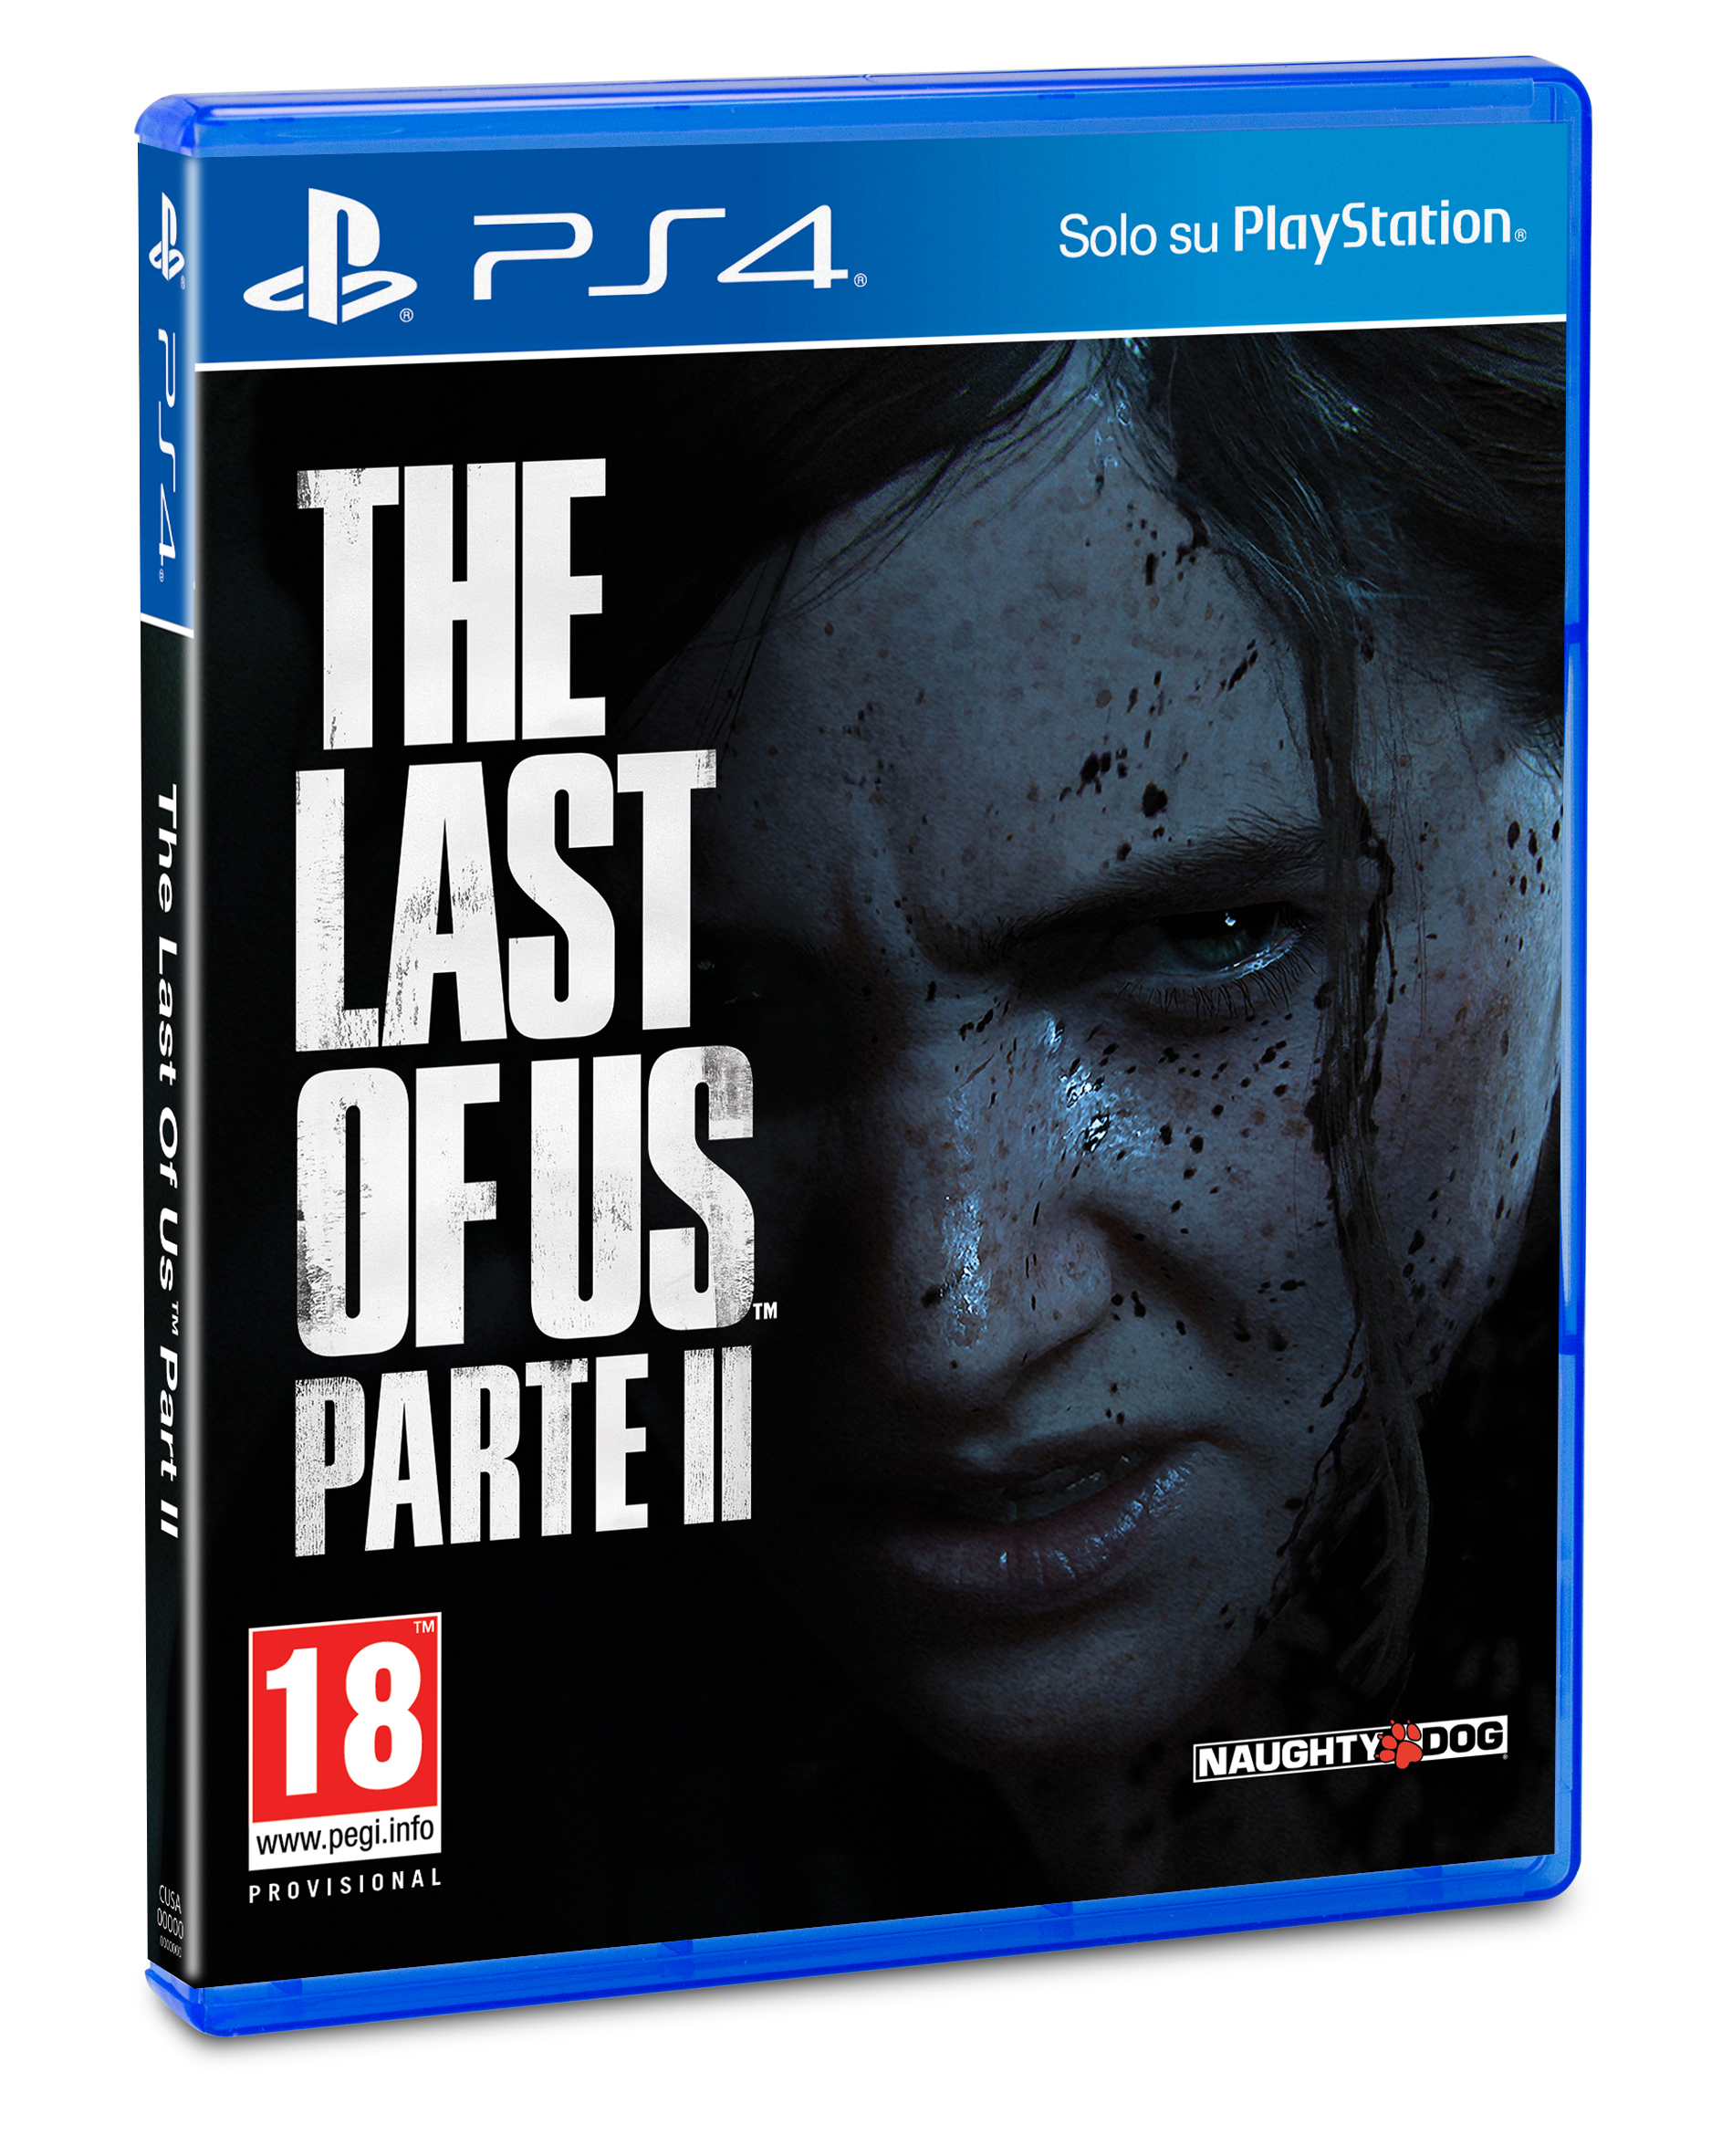 Videogioco Sony Entertainment THE LAST OF US Parte II 9330301 - PlayStation 4 Avventura 18+ [0778375]